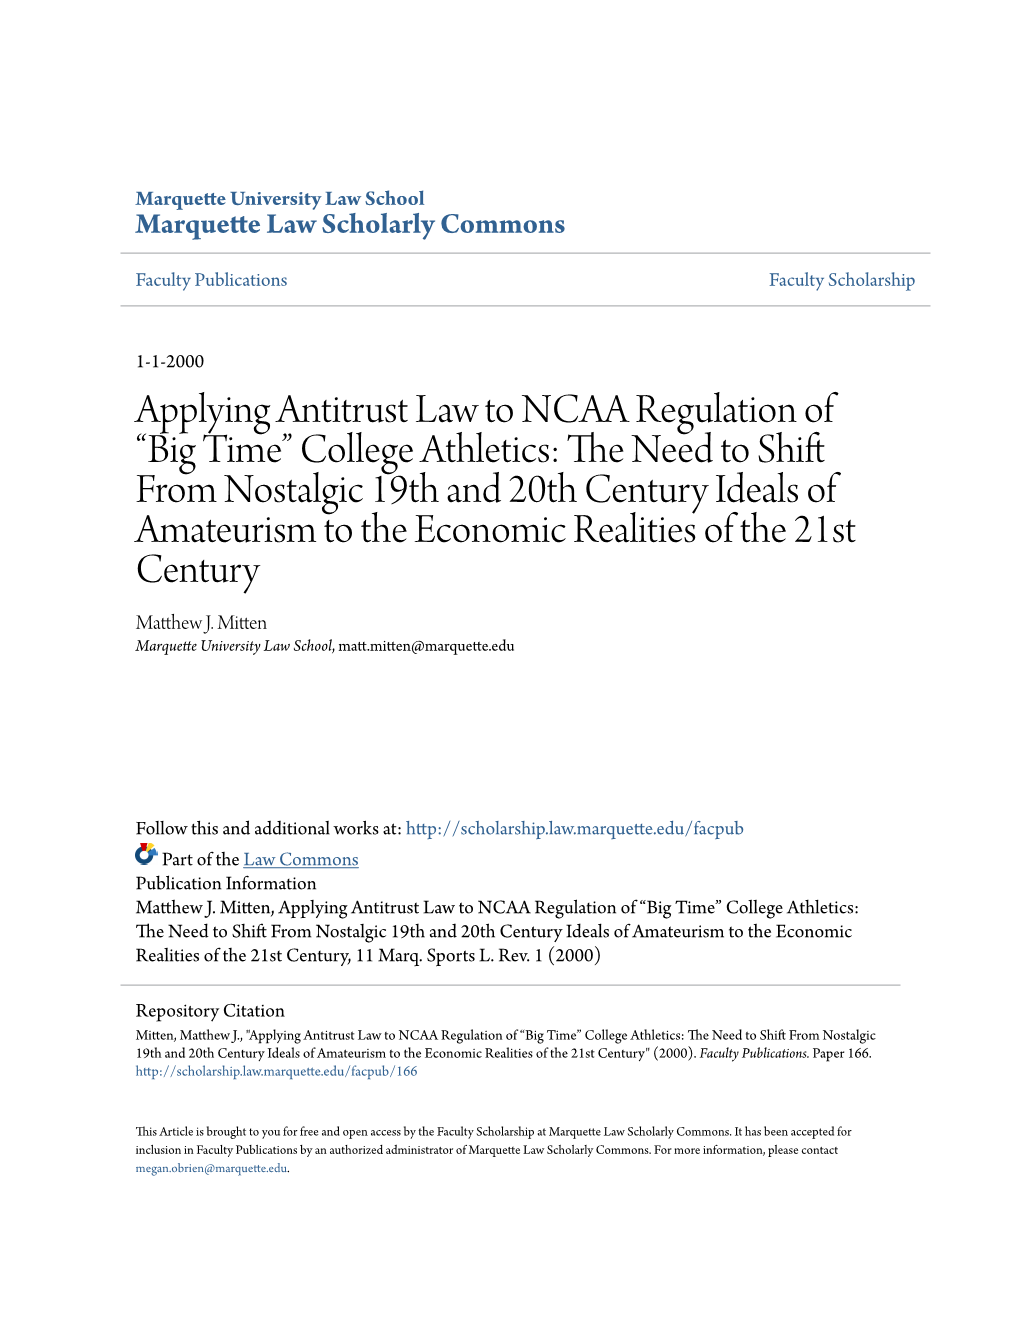 Applying Antitrust Law to NCAA Regulation of Â•Œbig